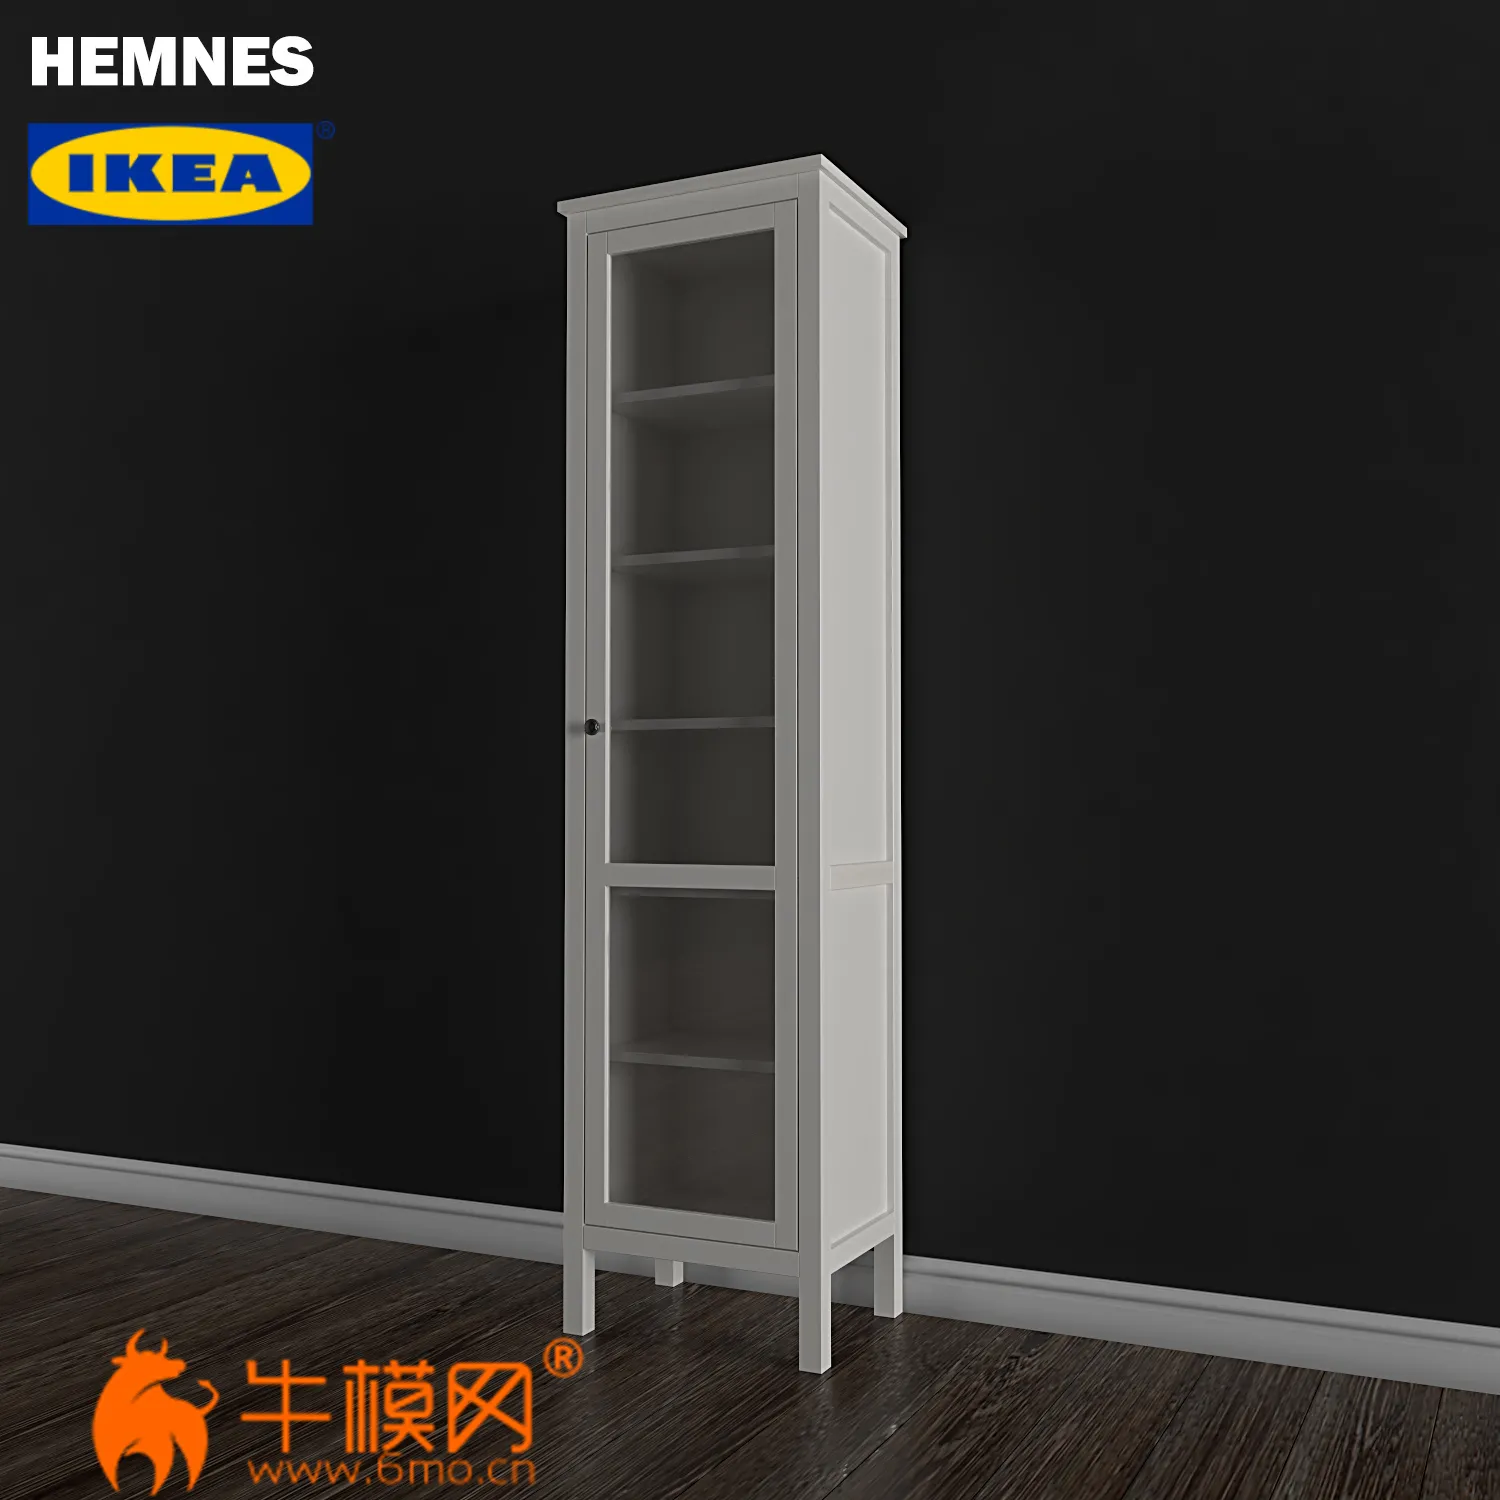 Rack Hemnes by IKEA – 2604